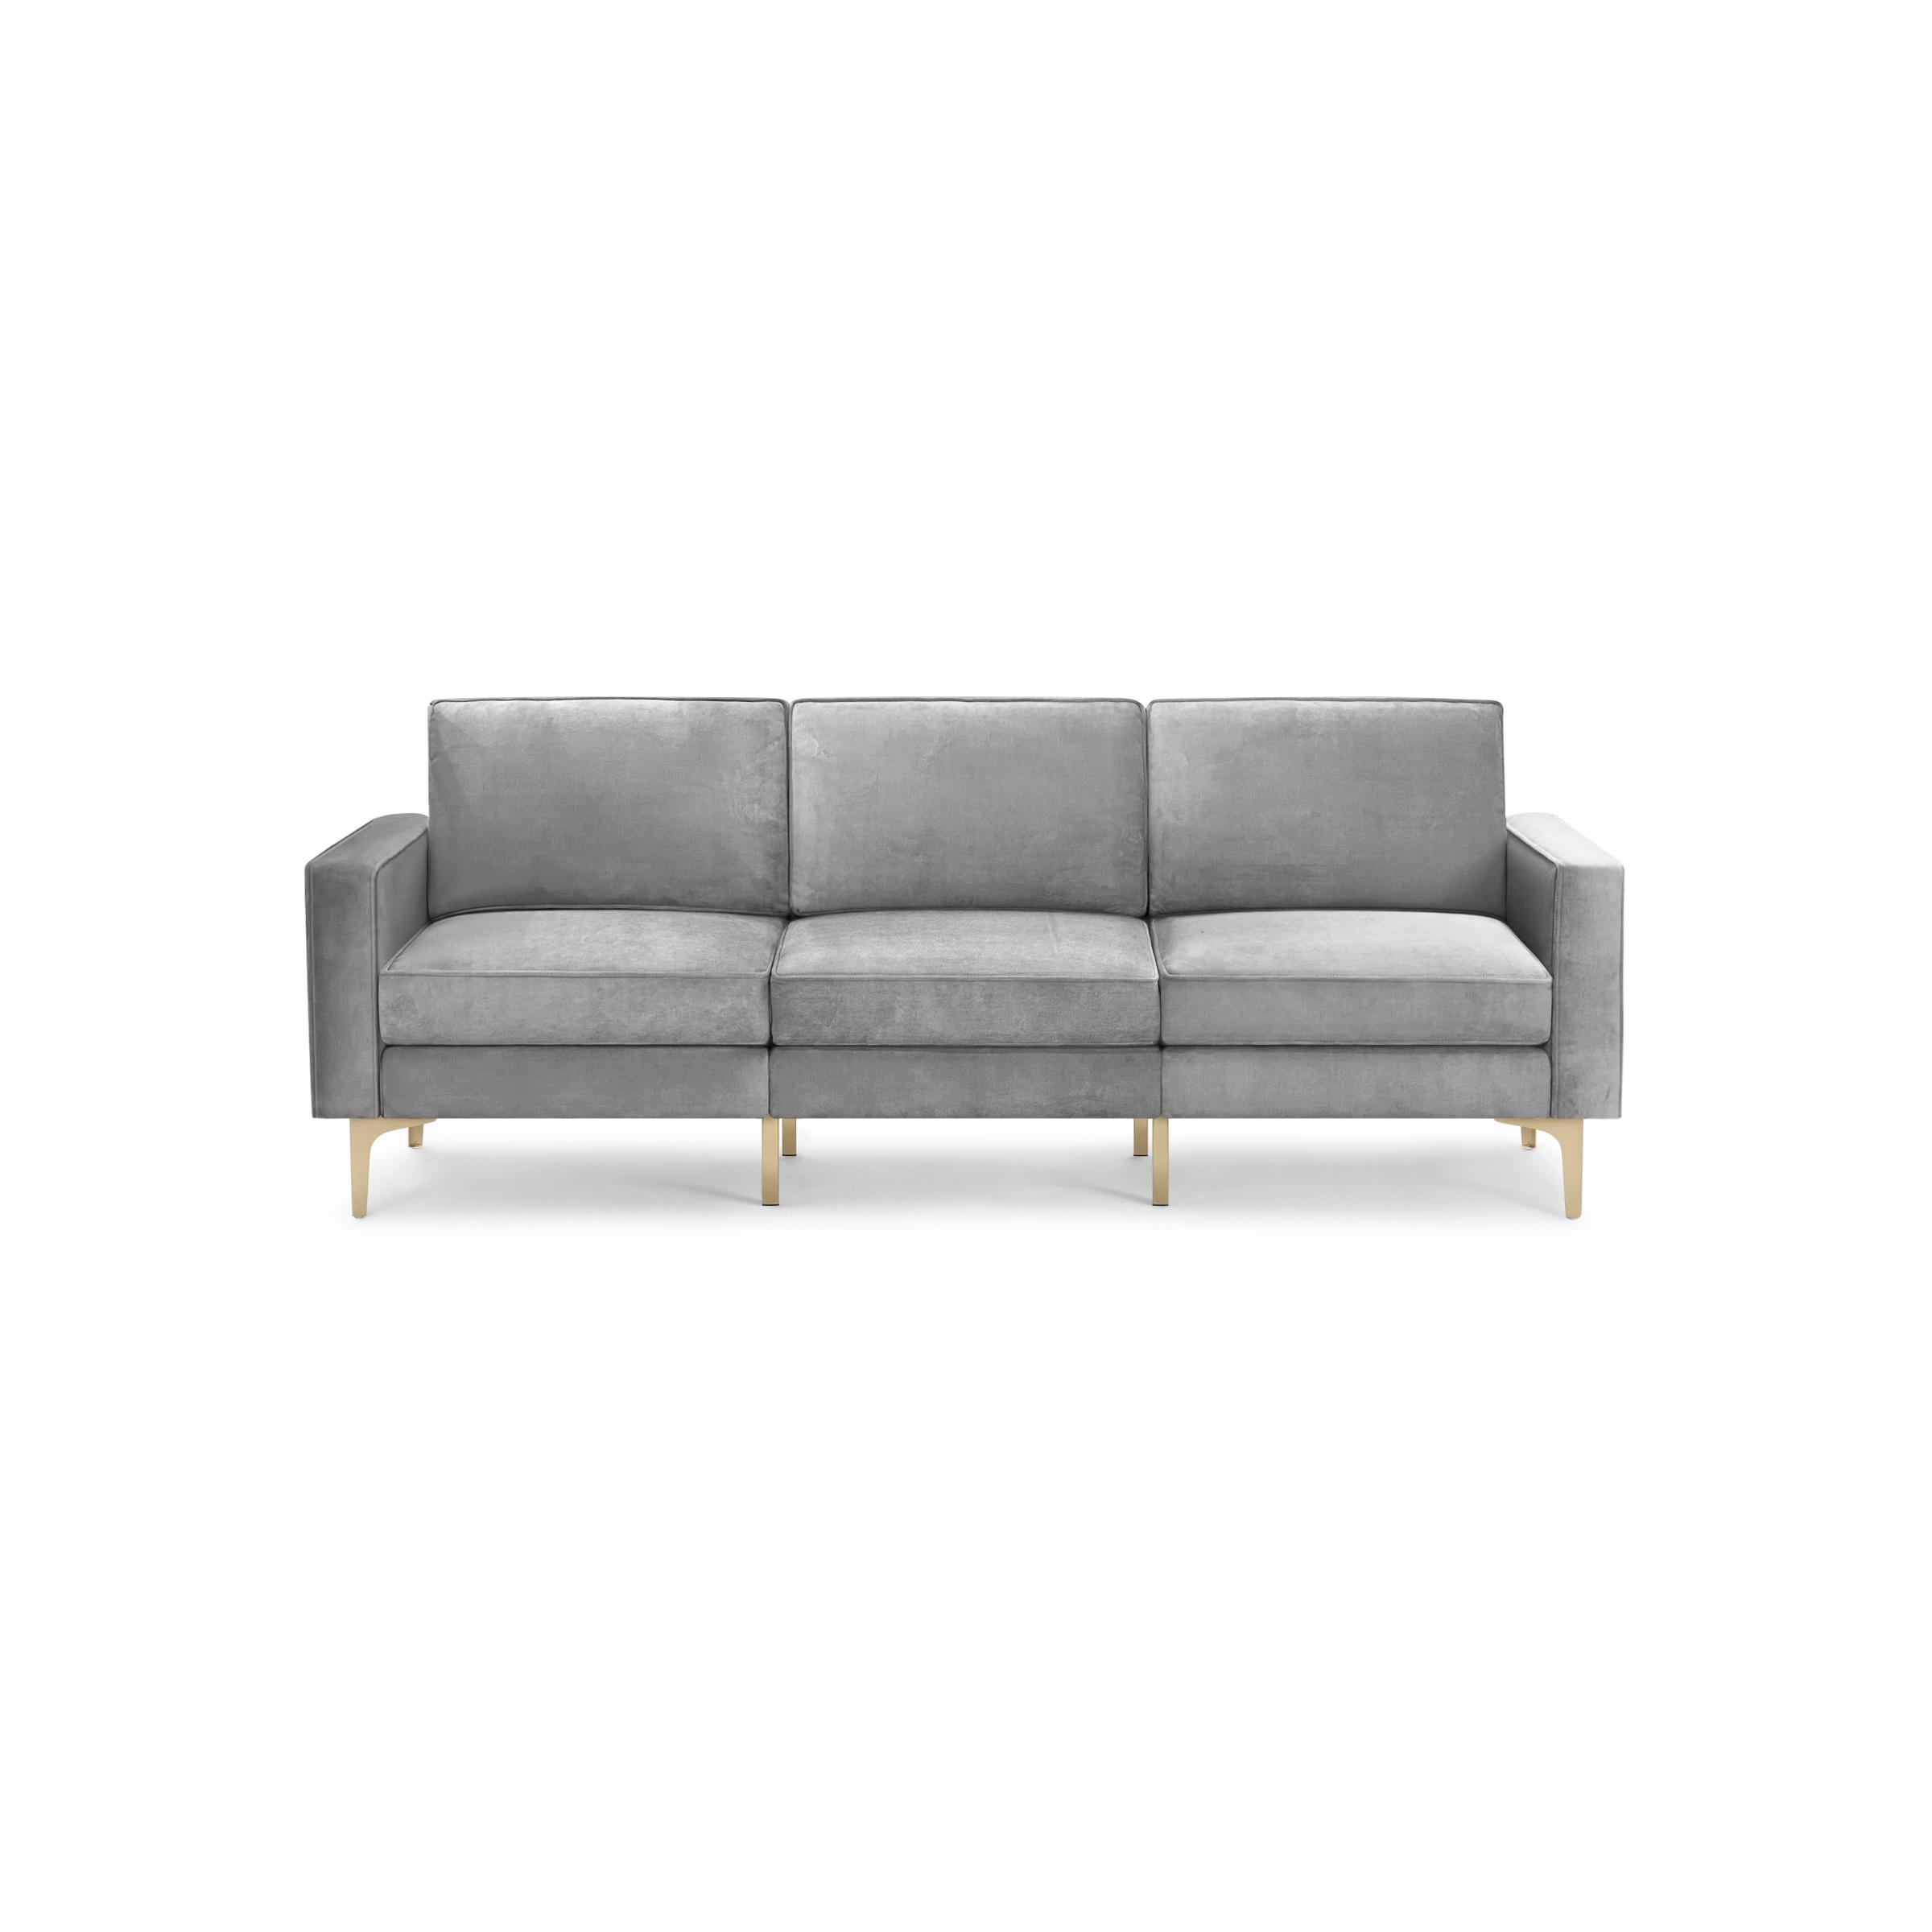 Nomad Velvet Sofa in Feather - Image 0